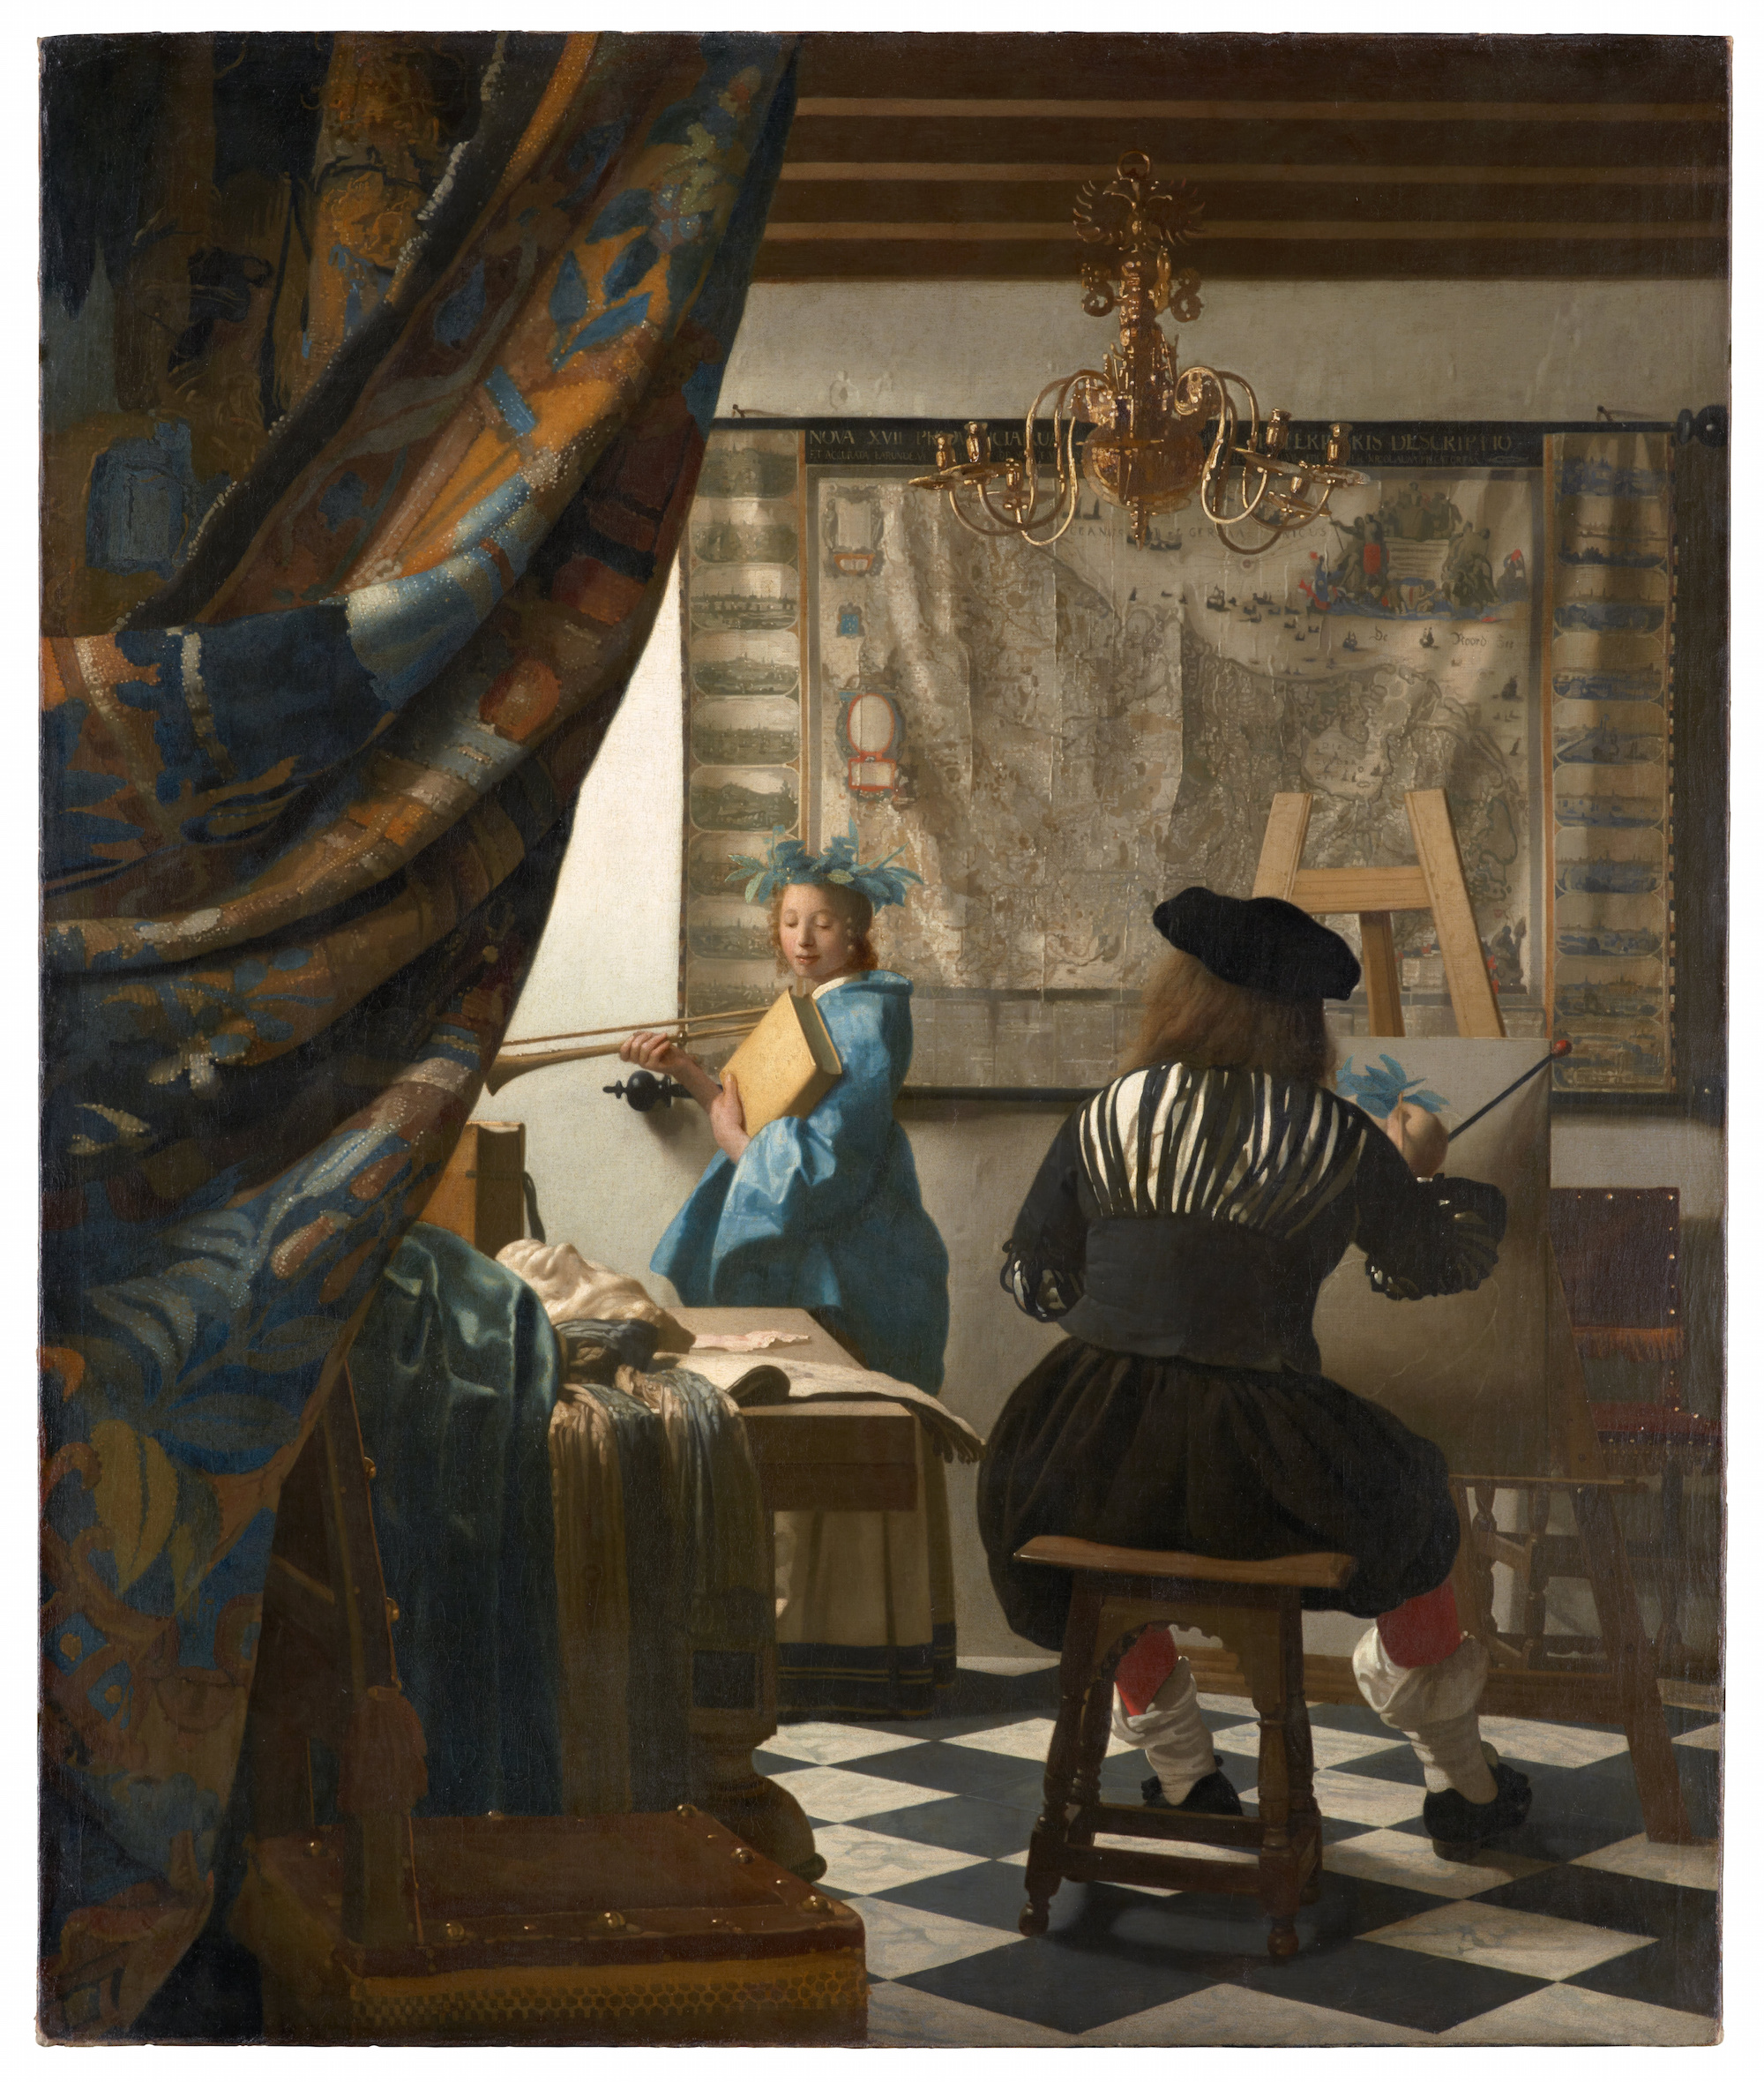 Arta de a Picta by Johannes Vermeer - 1665-1668 - 130 cm × 110 cm 